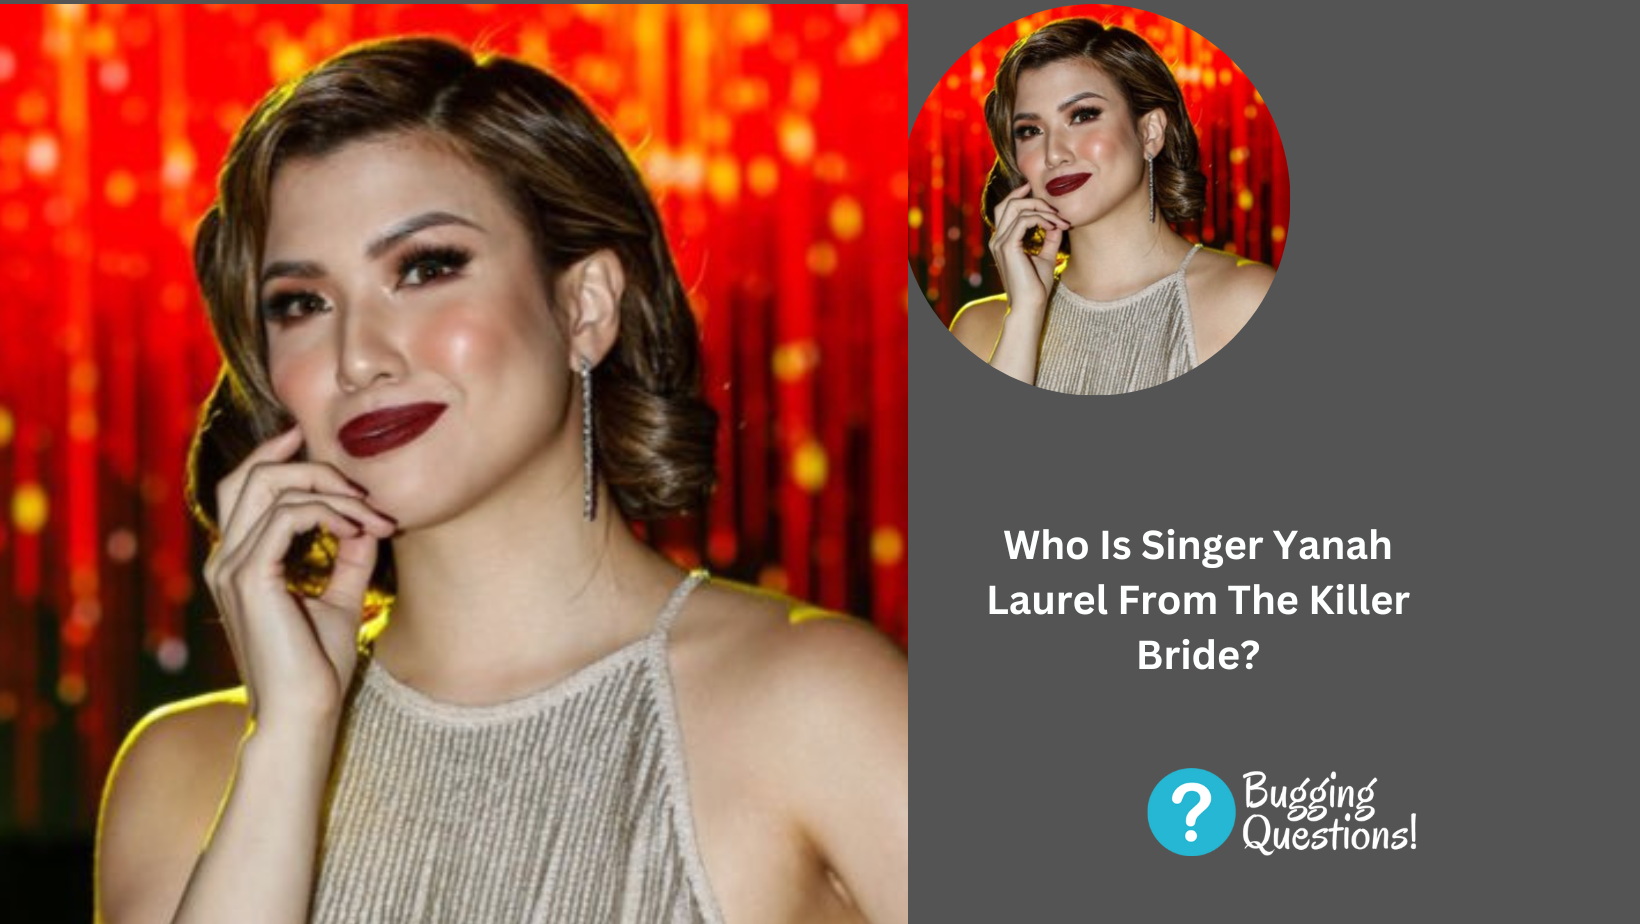 Who Is Singer Yanah Laurel From The Killer Bride?